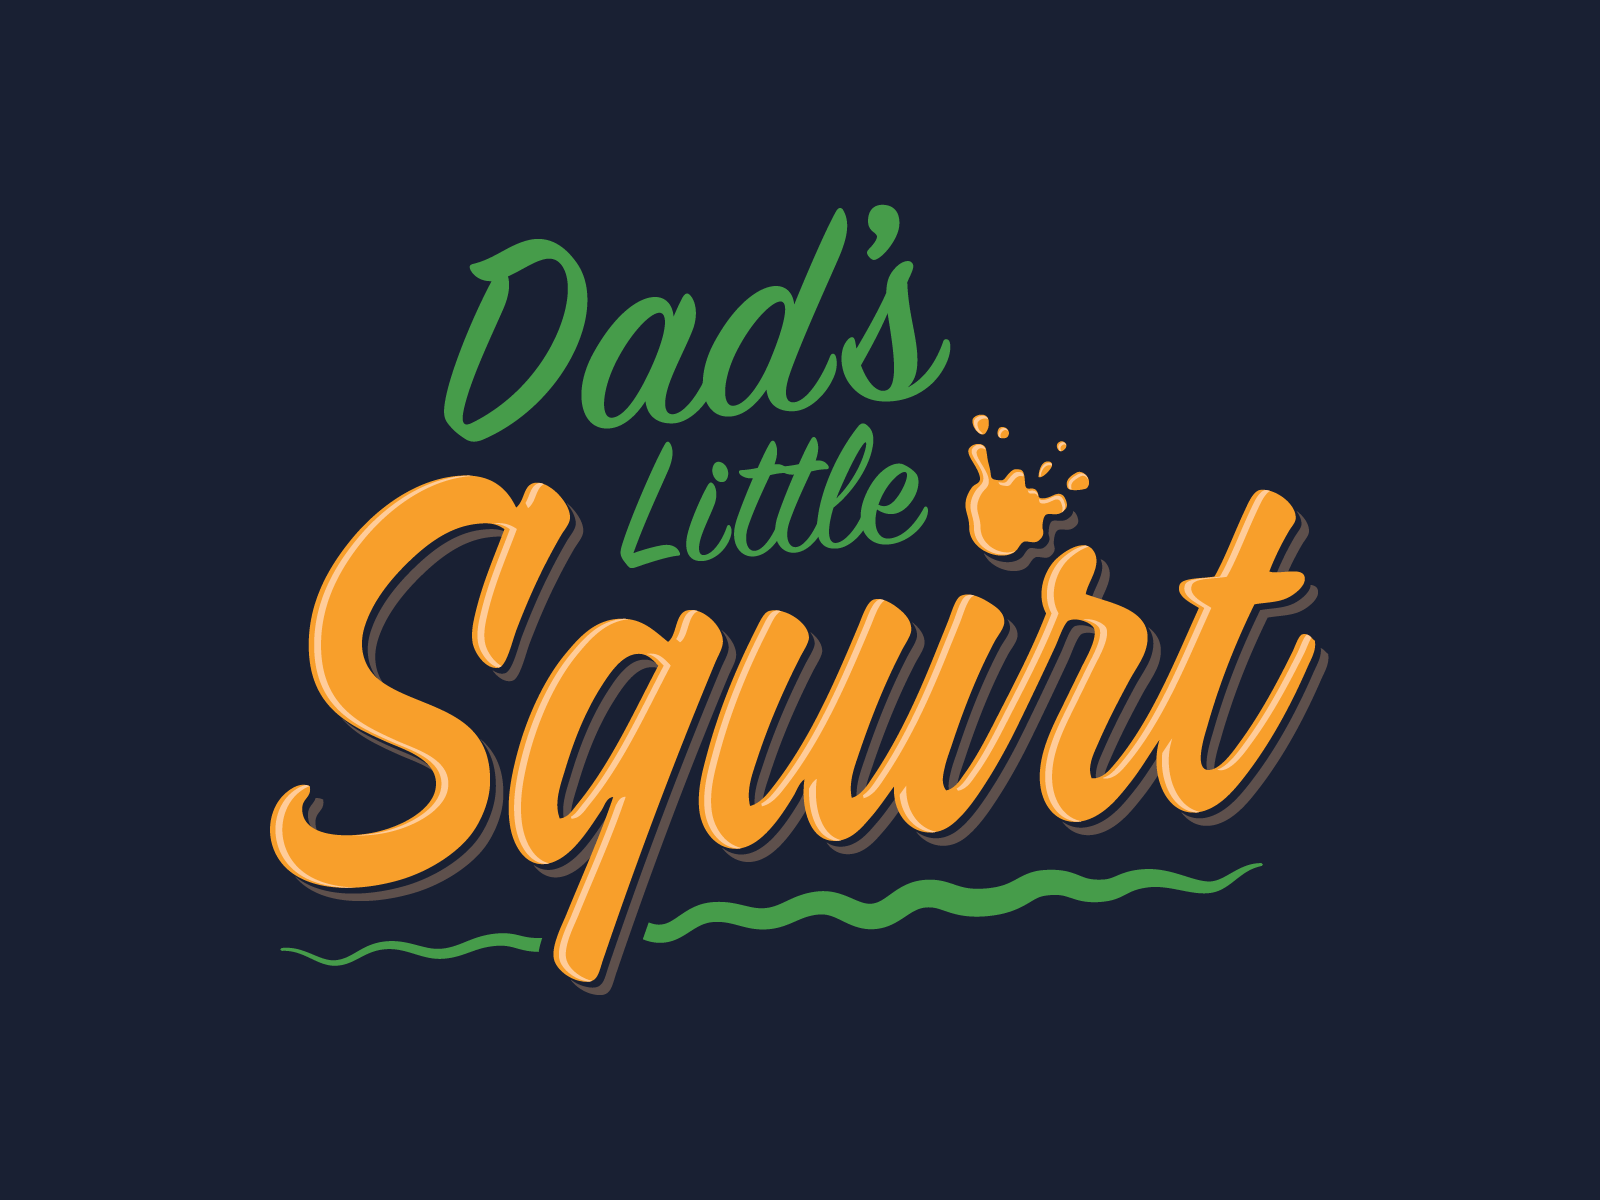 Dads Little Squirt Logo